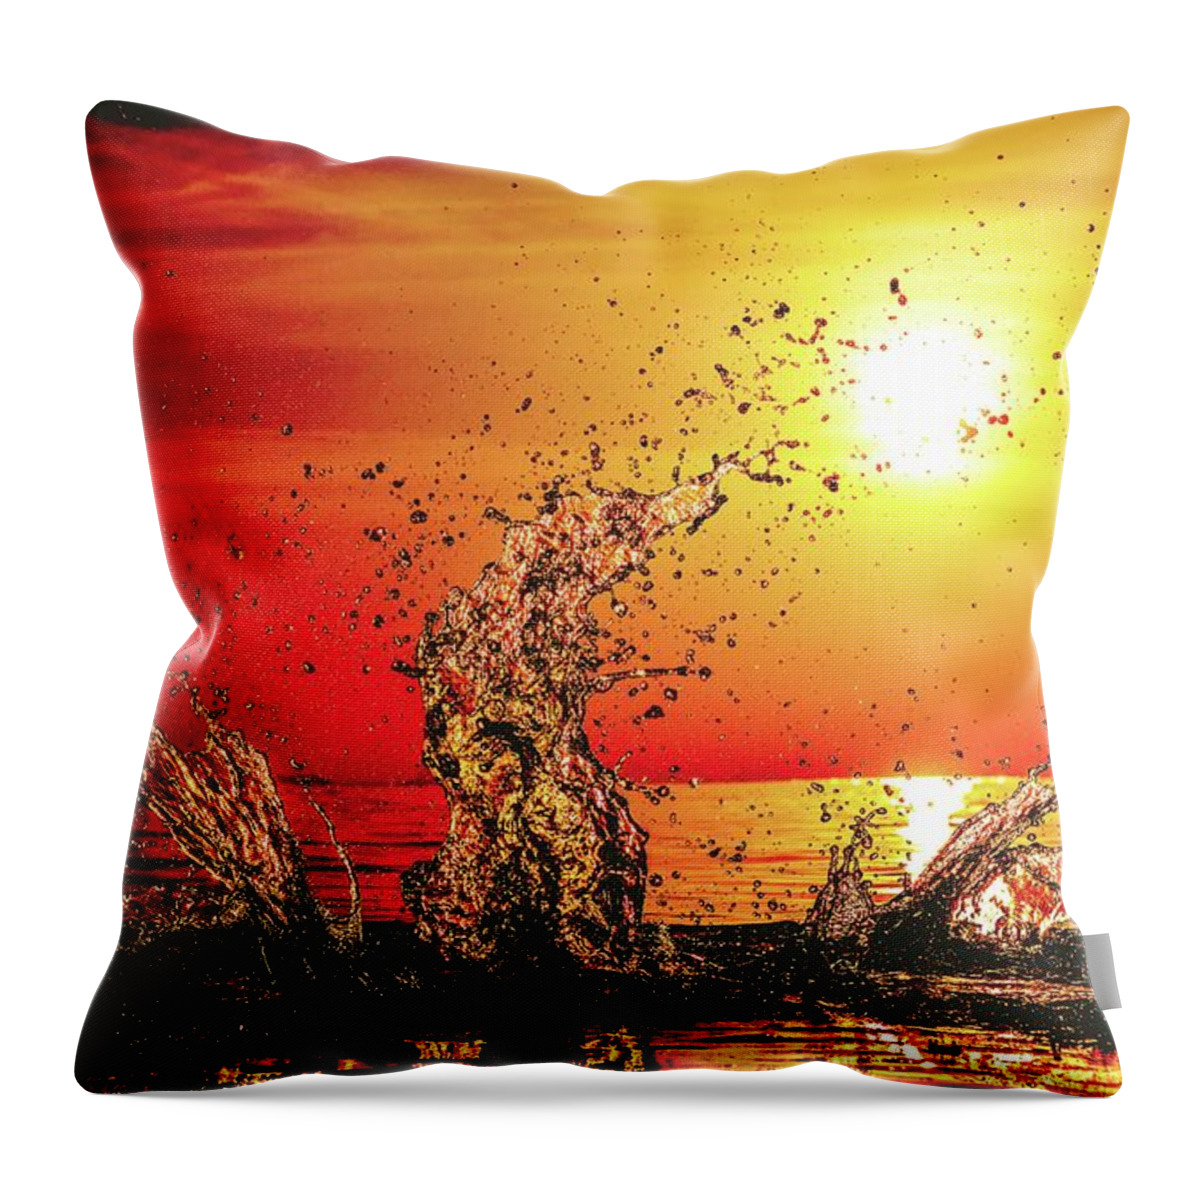 Water Throw Pillow featuring the photograph Orange splash by Josu Ozkaritz